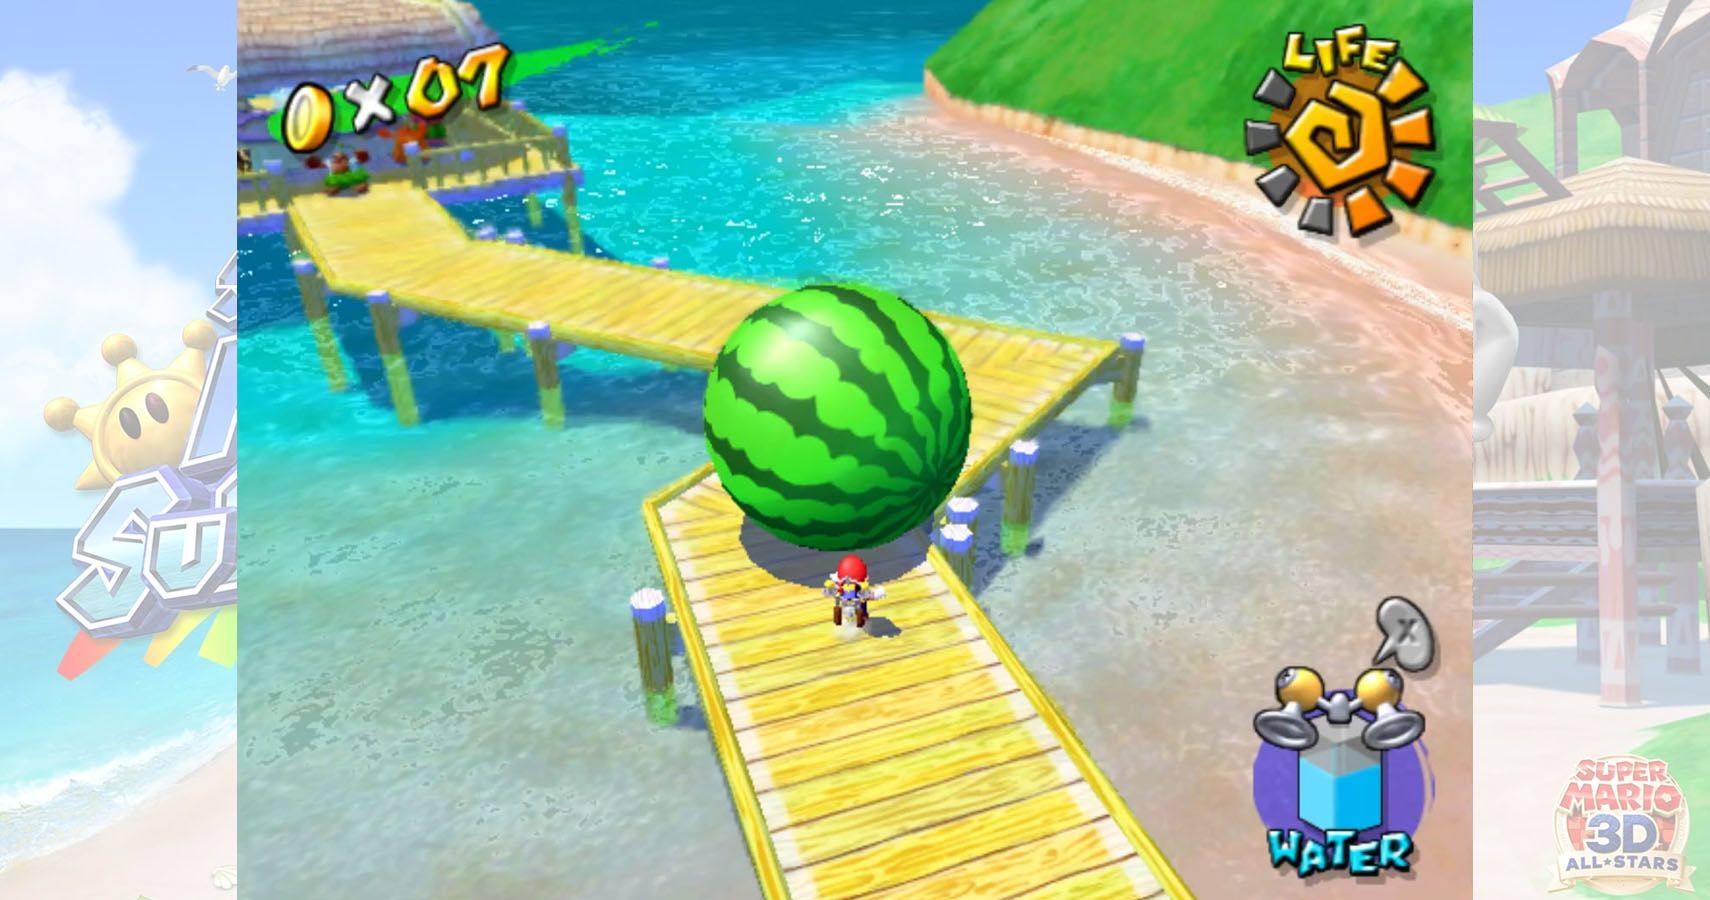 Mario pushing a watermelon along gelato beach in watermelon festival level of super mario sunshine.